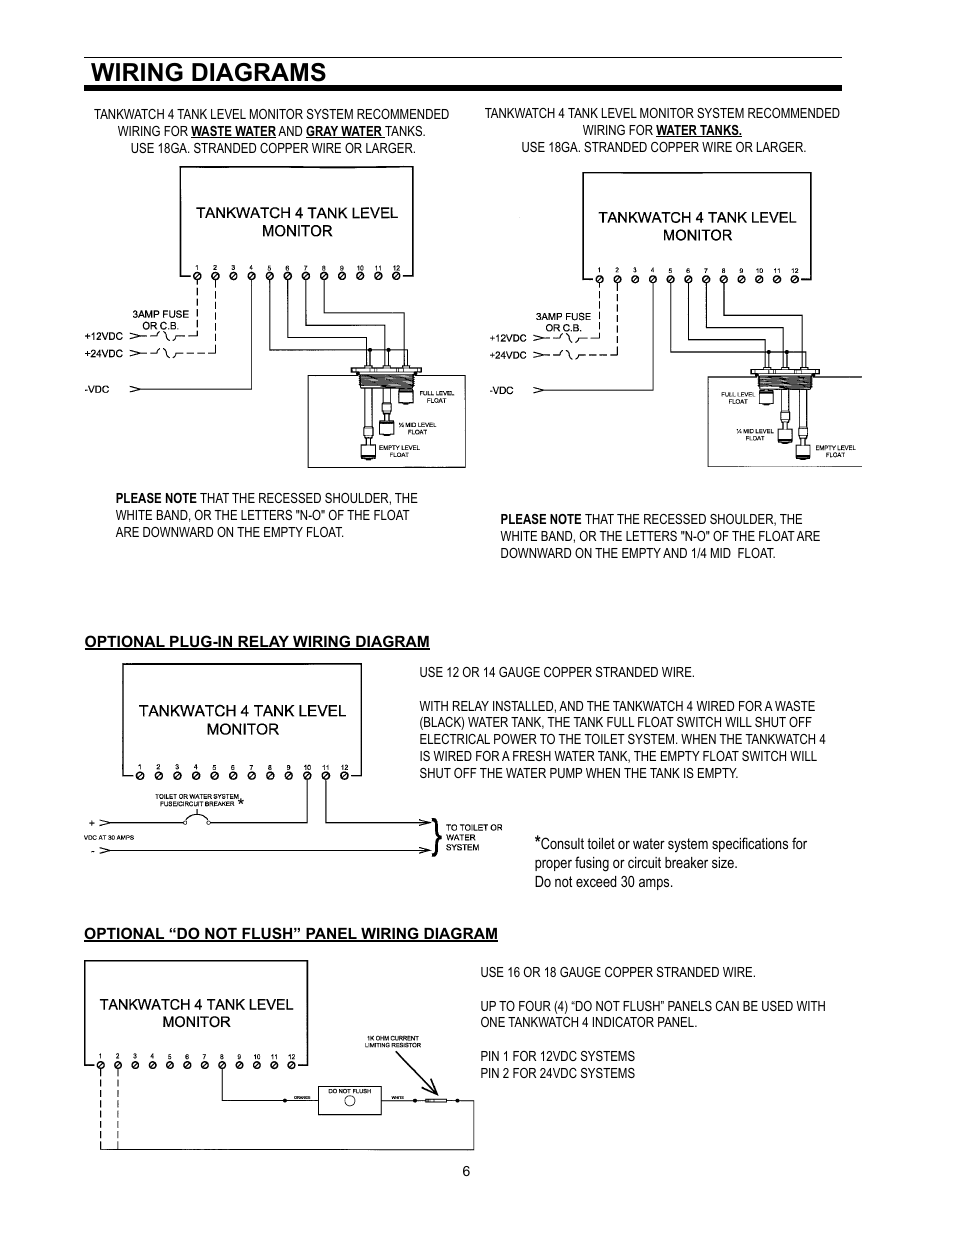 Wiring diagrams | SeaLand TankWatch 4 Level Monitoring System User Manual | Page 6 / 9